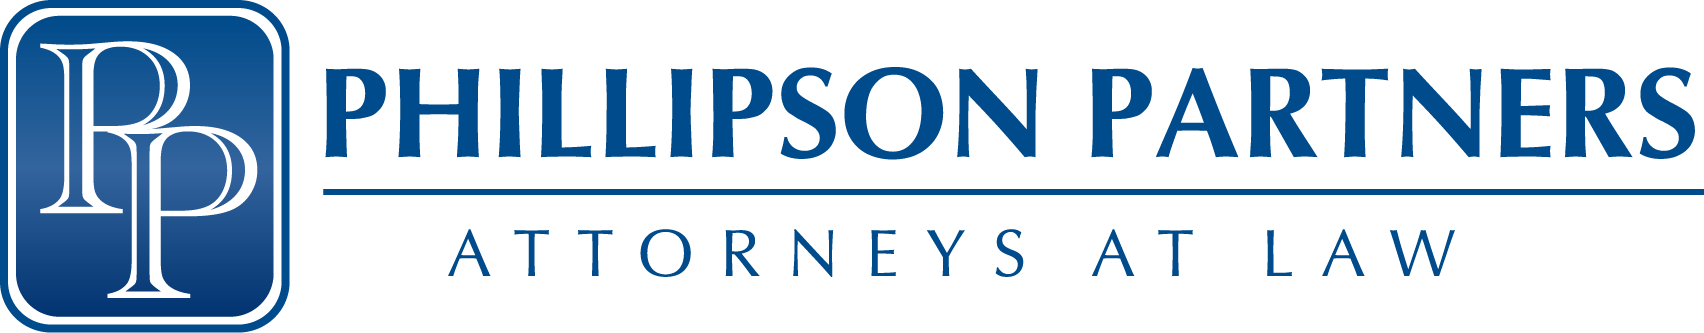 Phillipson Partners